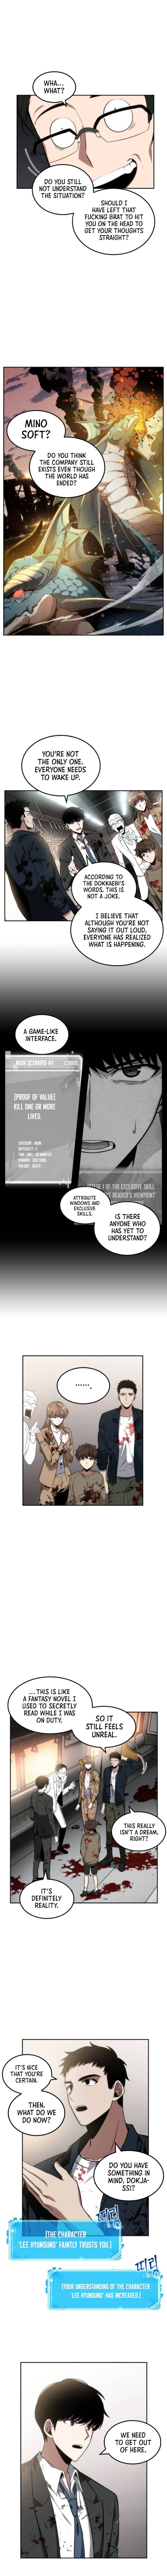 Omniscient Reader's View Manga Manga Chapter - 8 - image 9